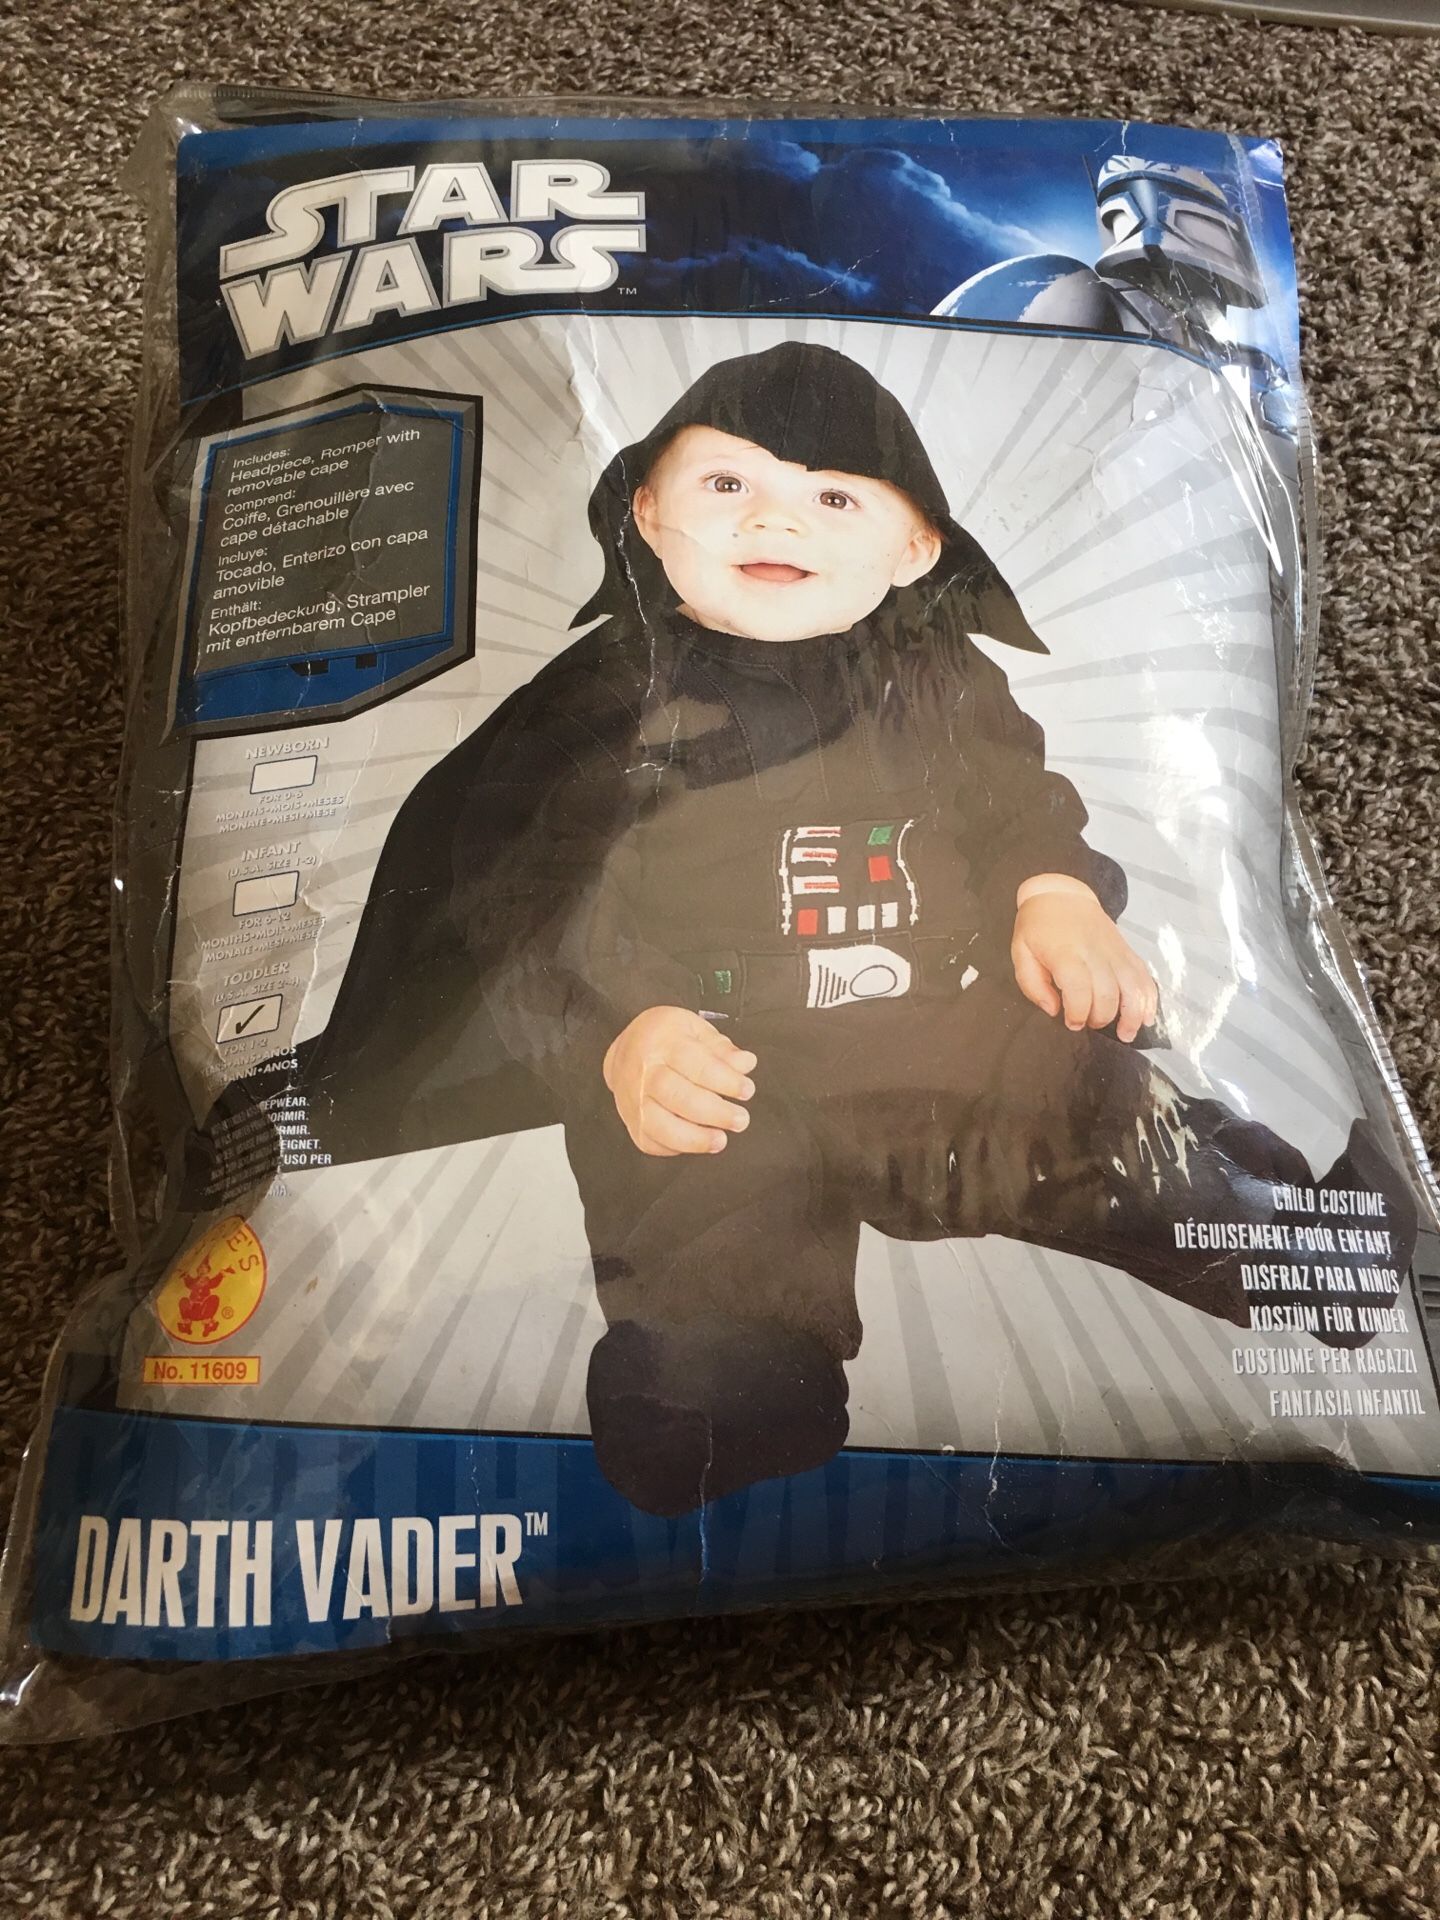 Darth Vader(Halloween costume)